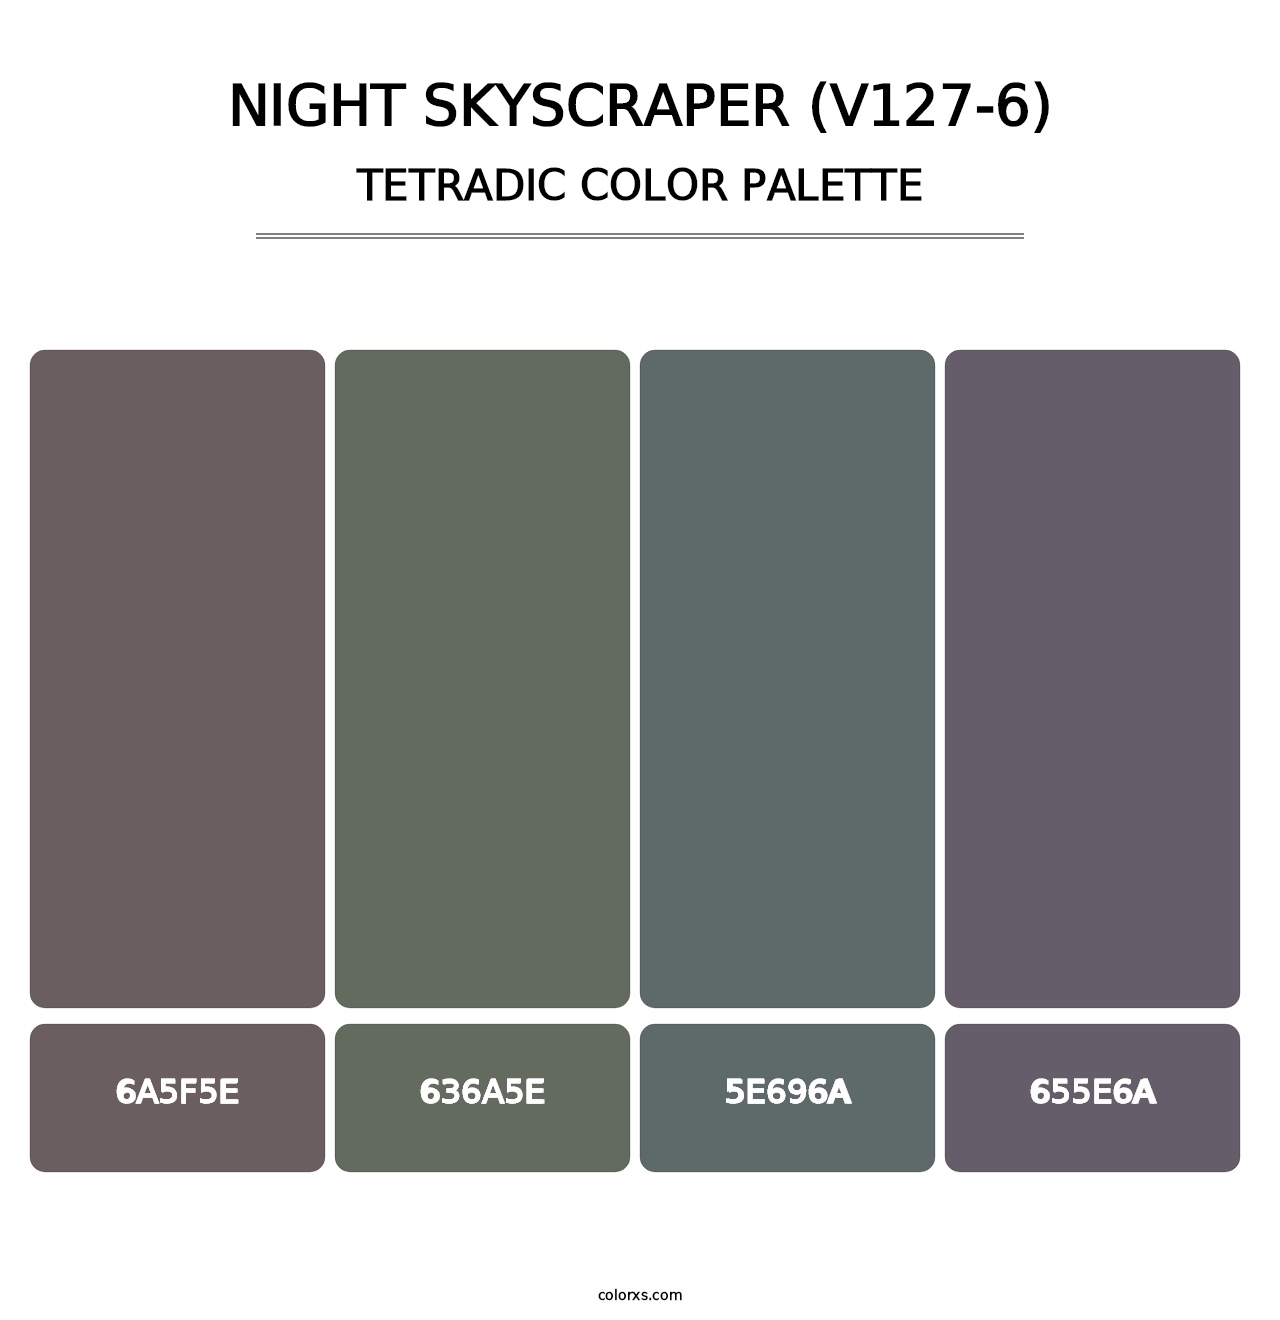 Night Skyscraper (V127-6) - Tetradic Color Palette